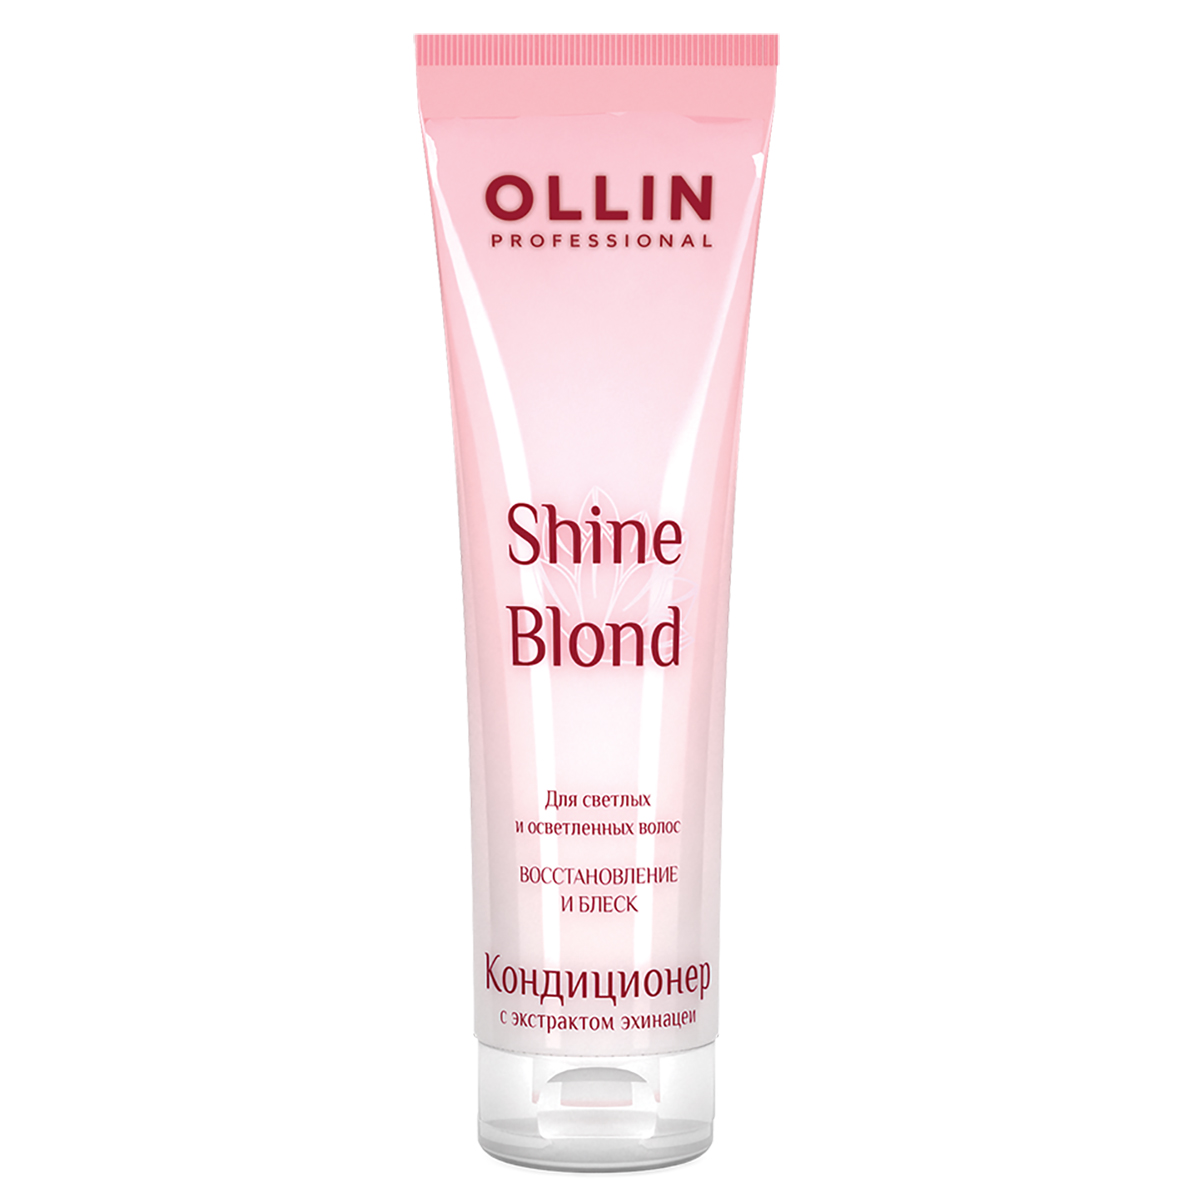 Shine Blond Кондиционер с экстрактом эхинацеи 250 мл, OLLIN - фото 1